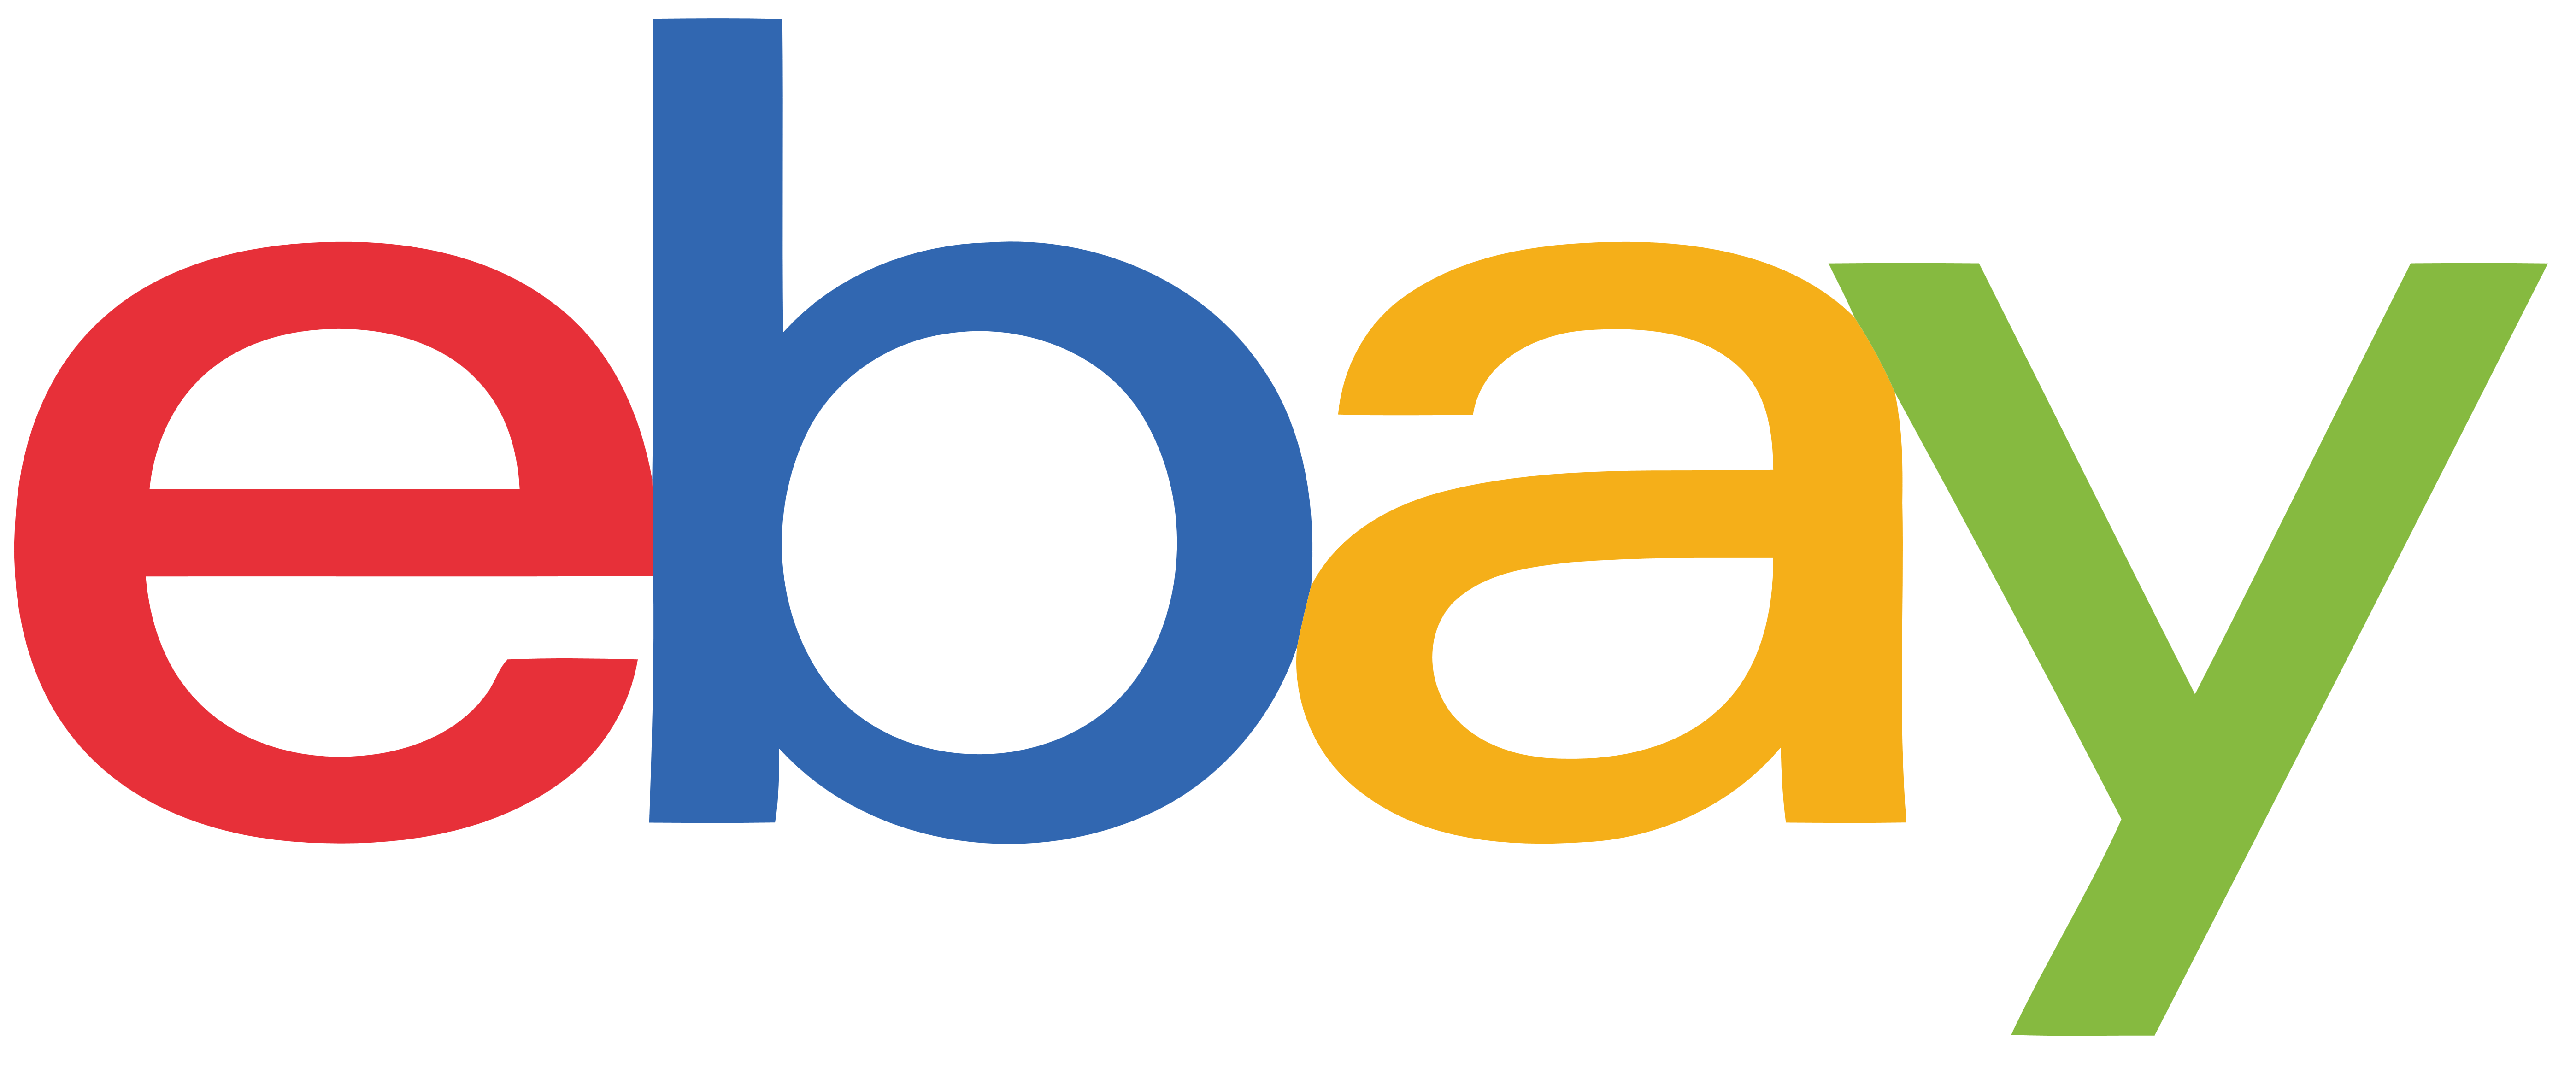 Resolution Logo - eBay – Logos, brands and logotypes